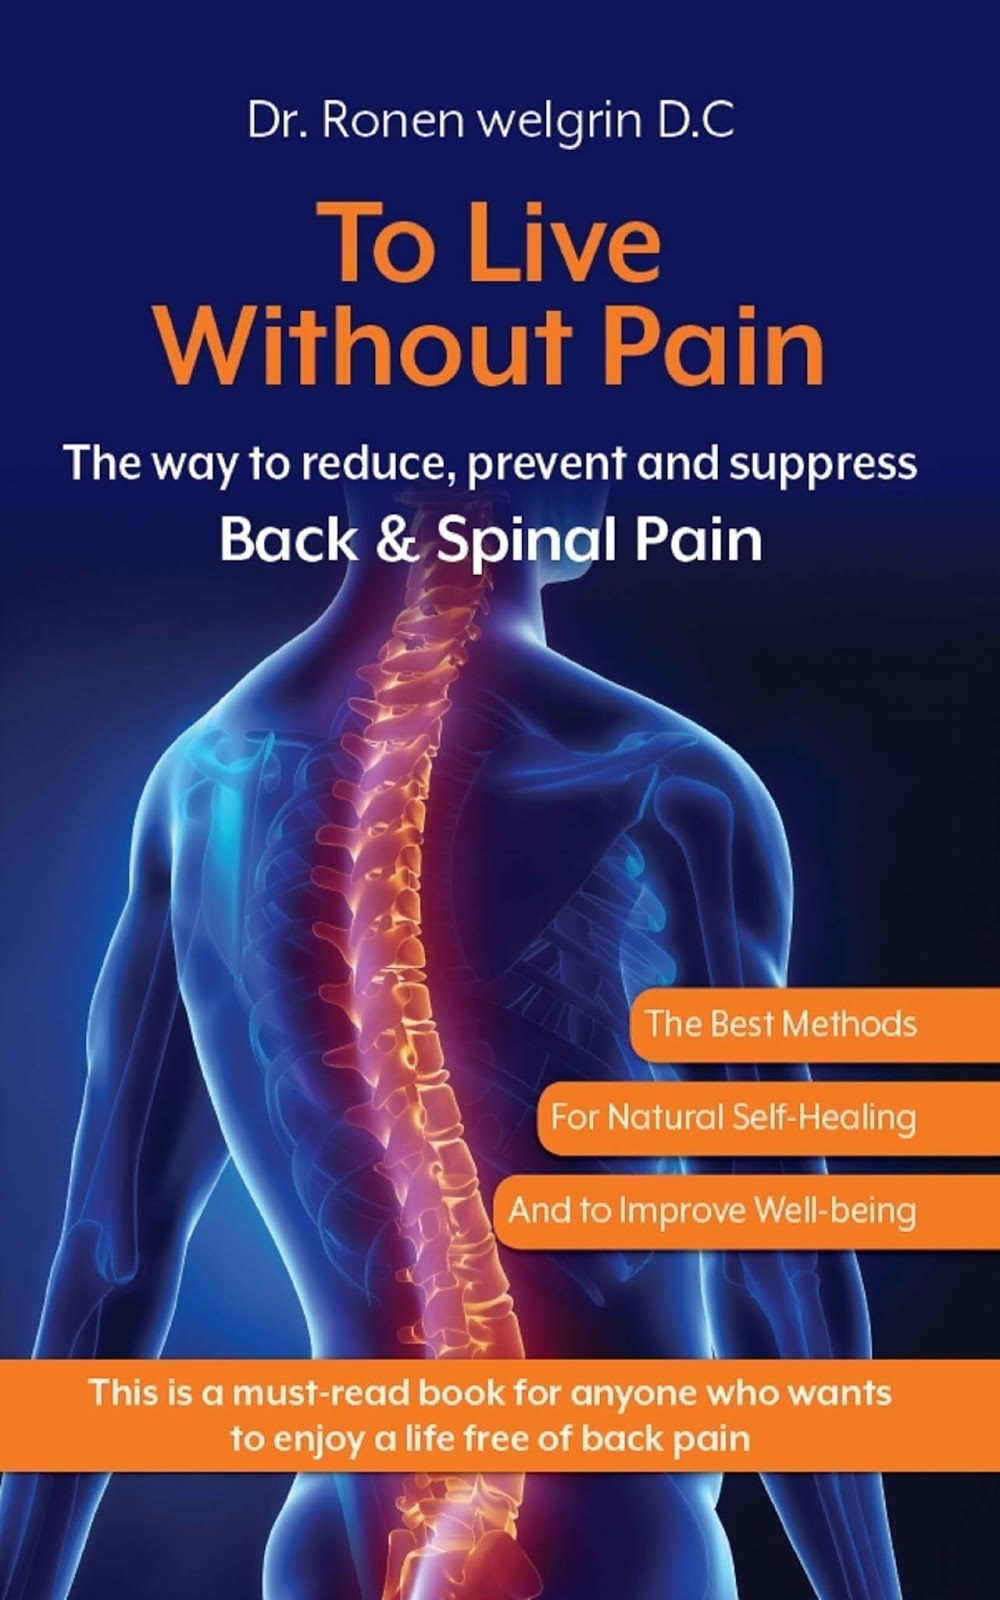 Without pain. Life without Pain. Pain without e. Books for children Front back Spine Cover.